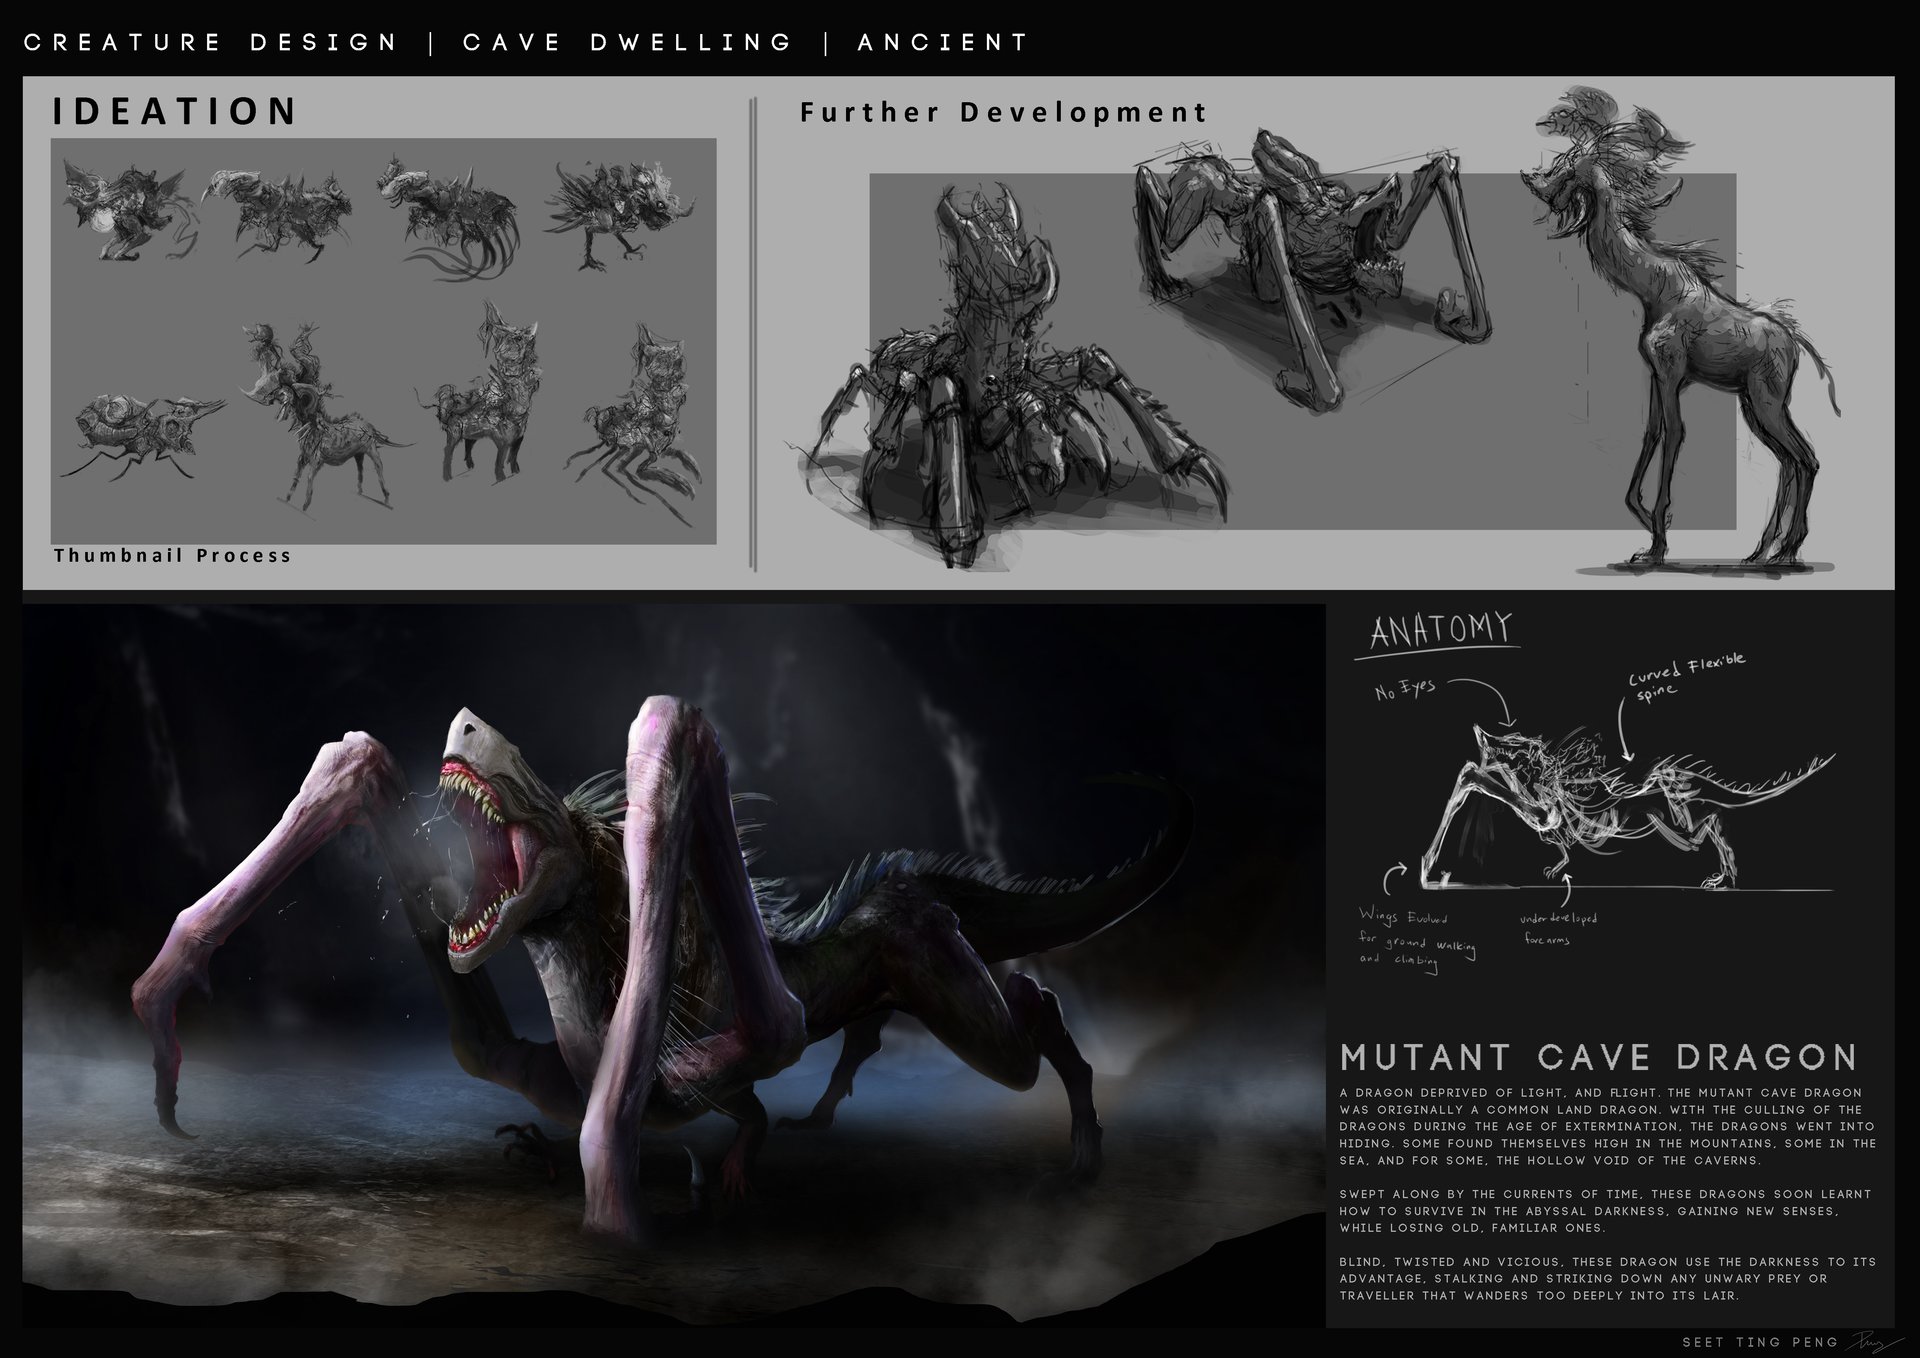 ArtStation - Cave mutant